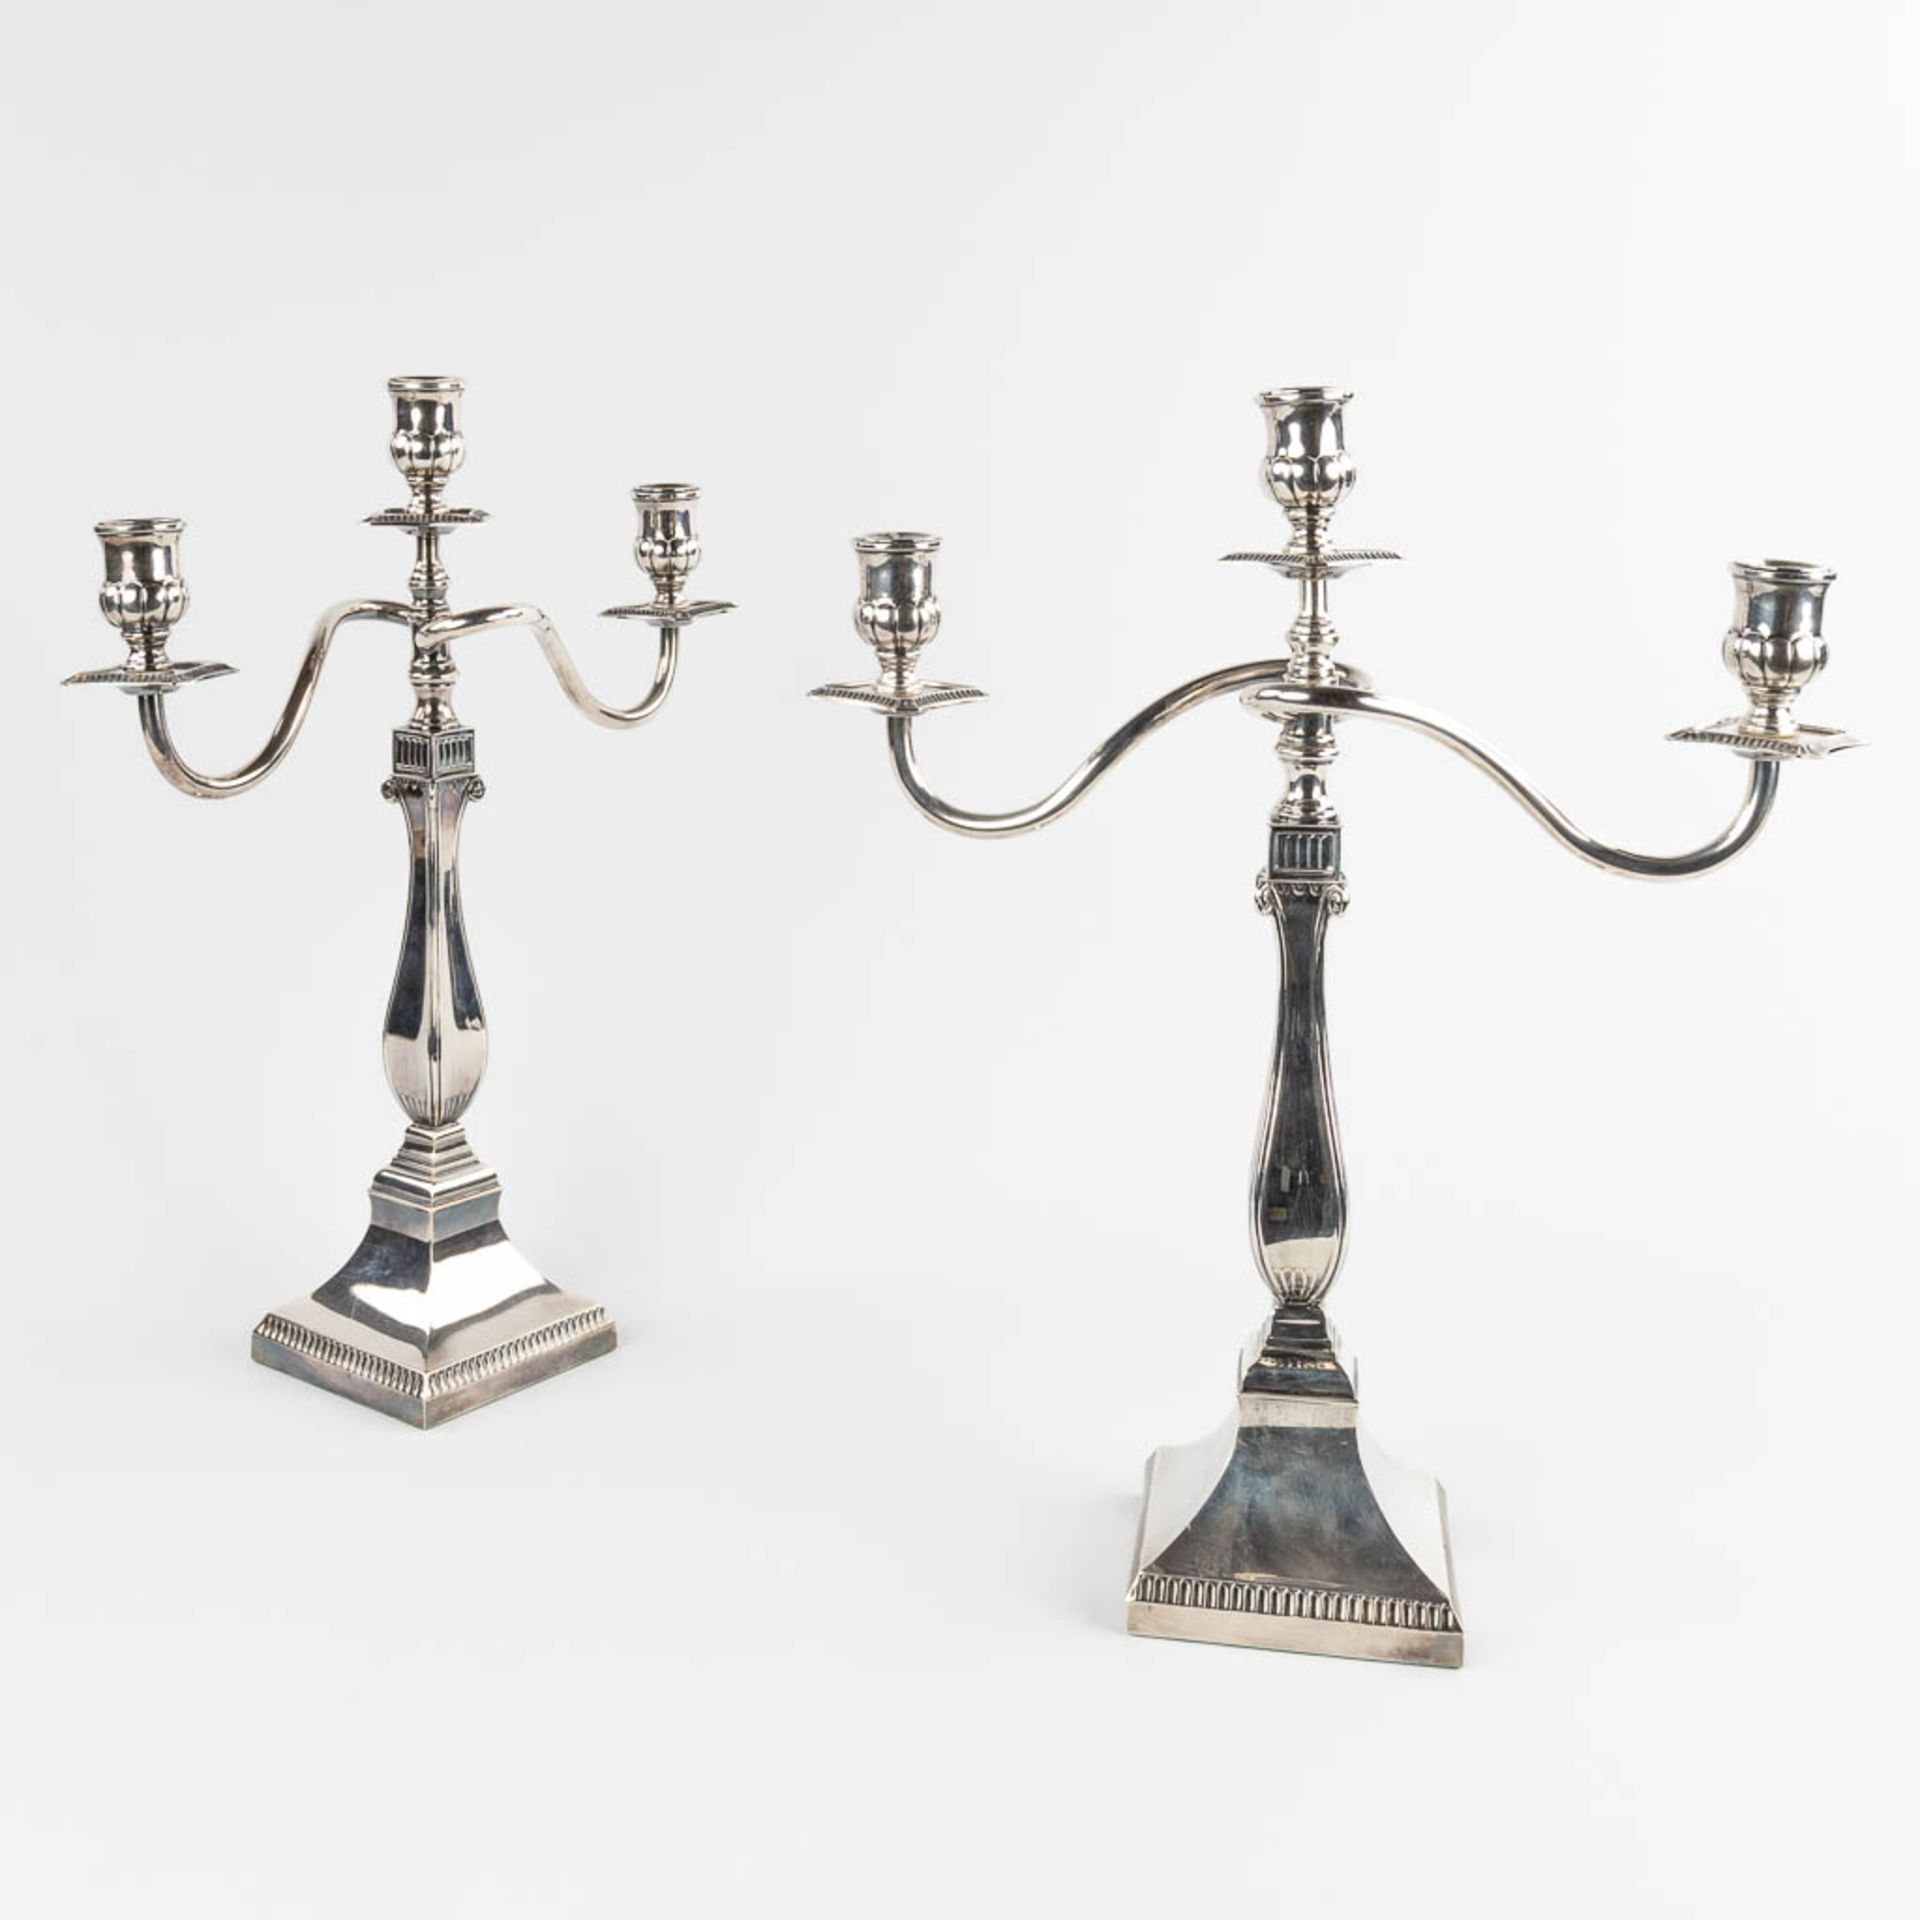 A pair of three-armed table candelabra, Spain, Silver, 915/1000. 1621g.  (D:12 x W:37 x H:45 cm)